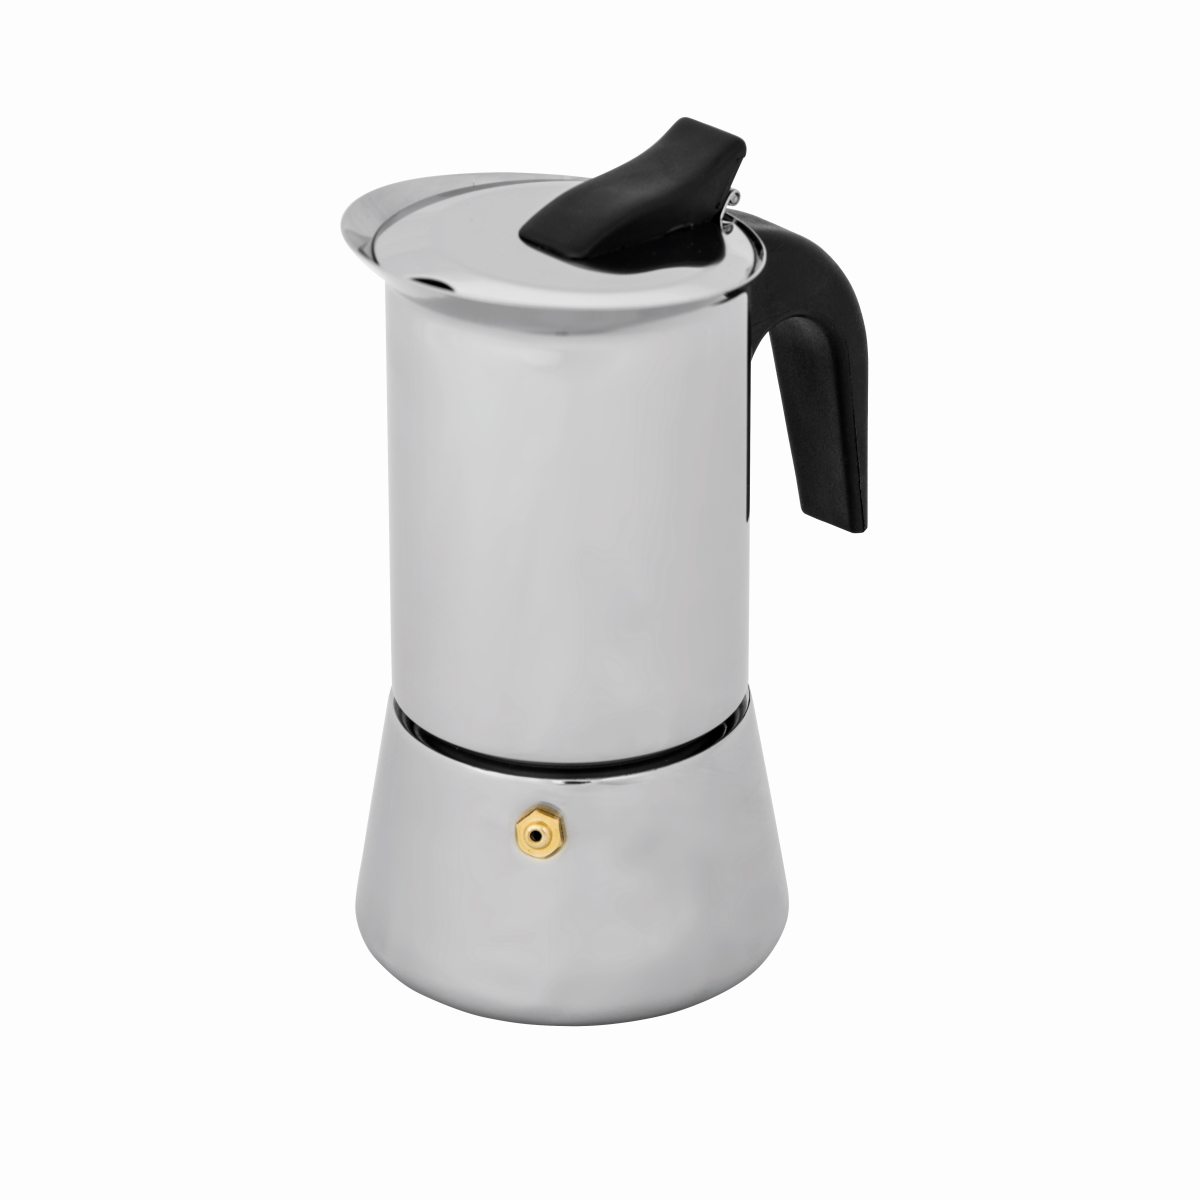 Avanti Inox Espresso Maker - 9 Cup